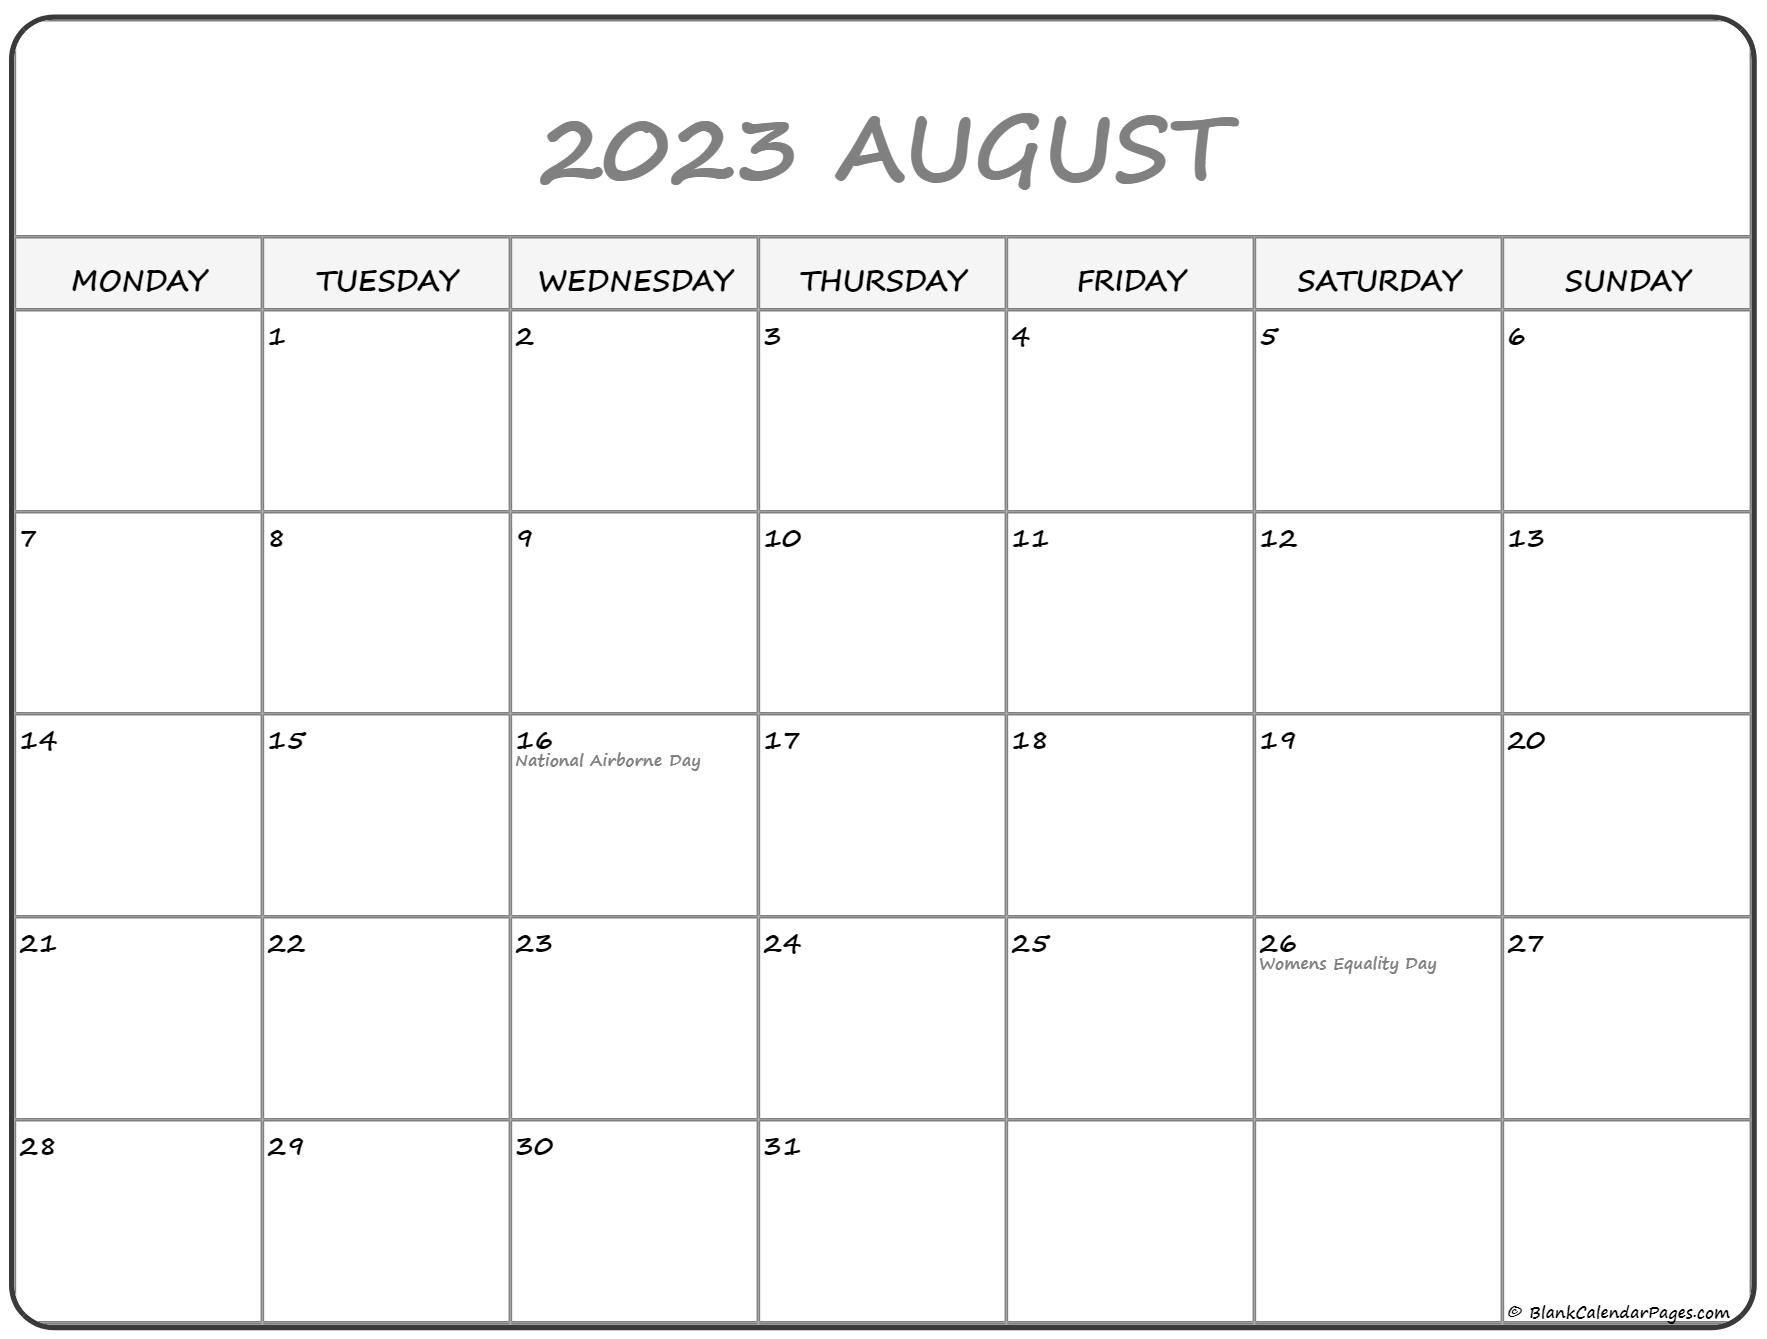 August 2023 Monday Calendar Monday to Sunday